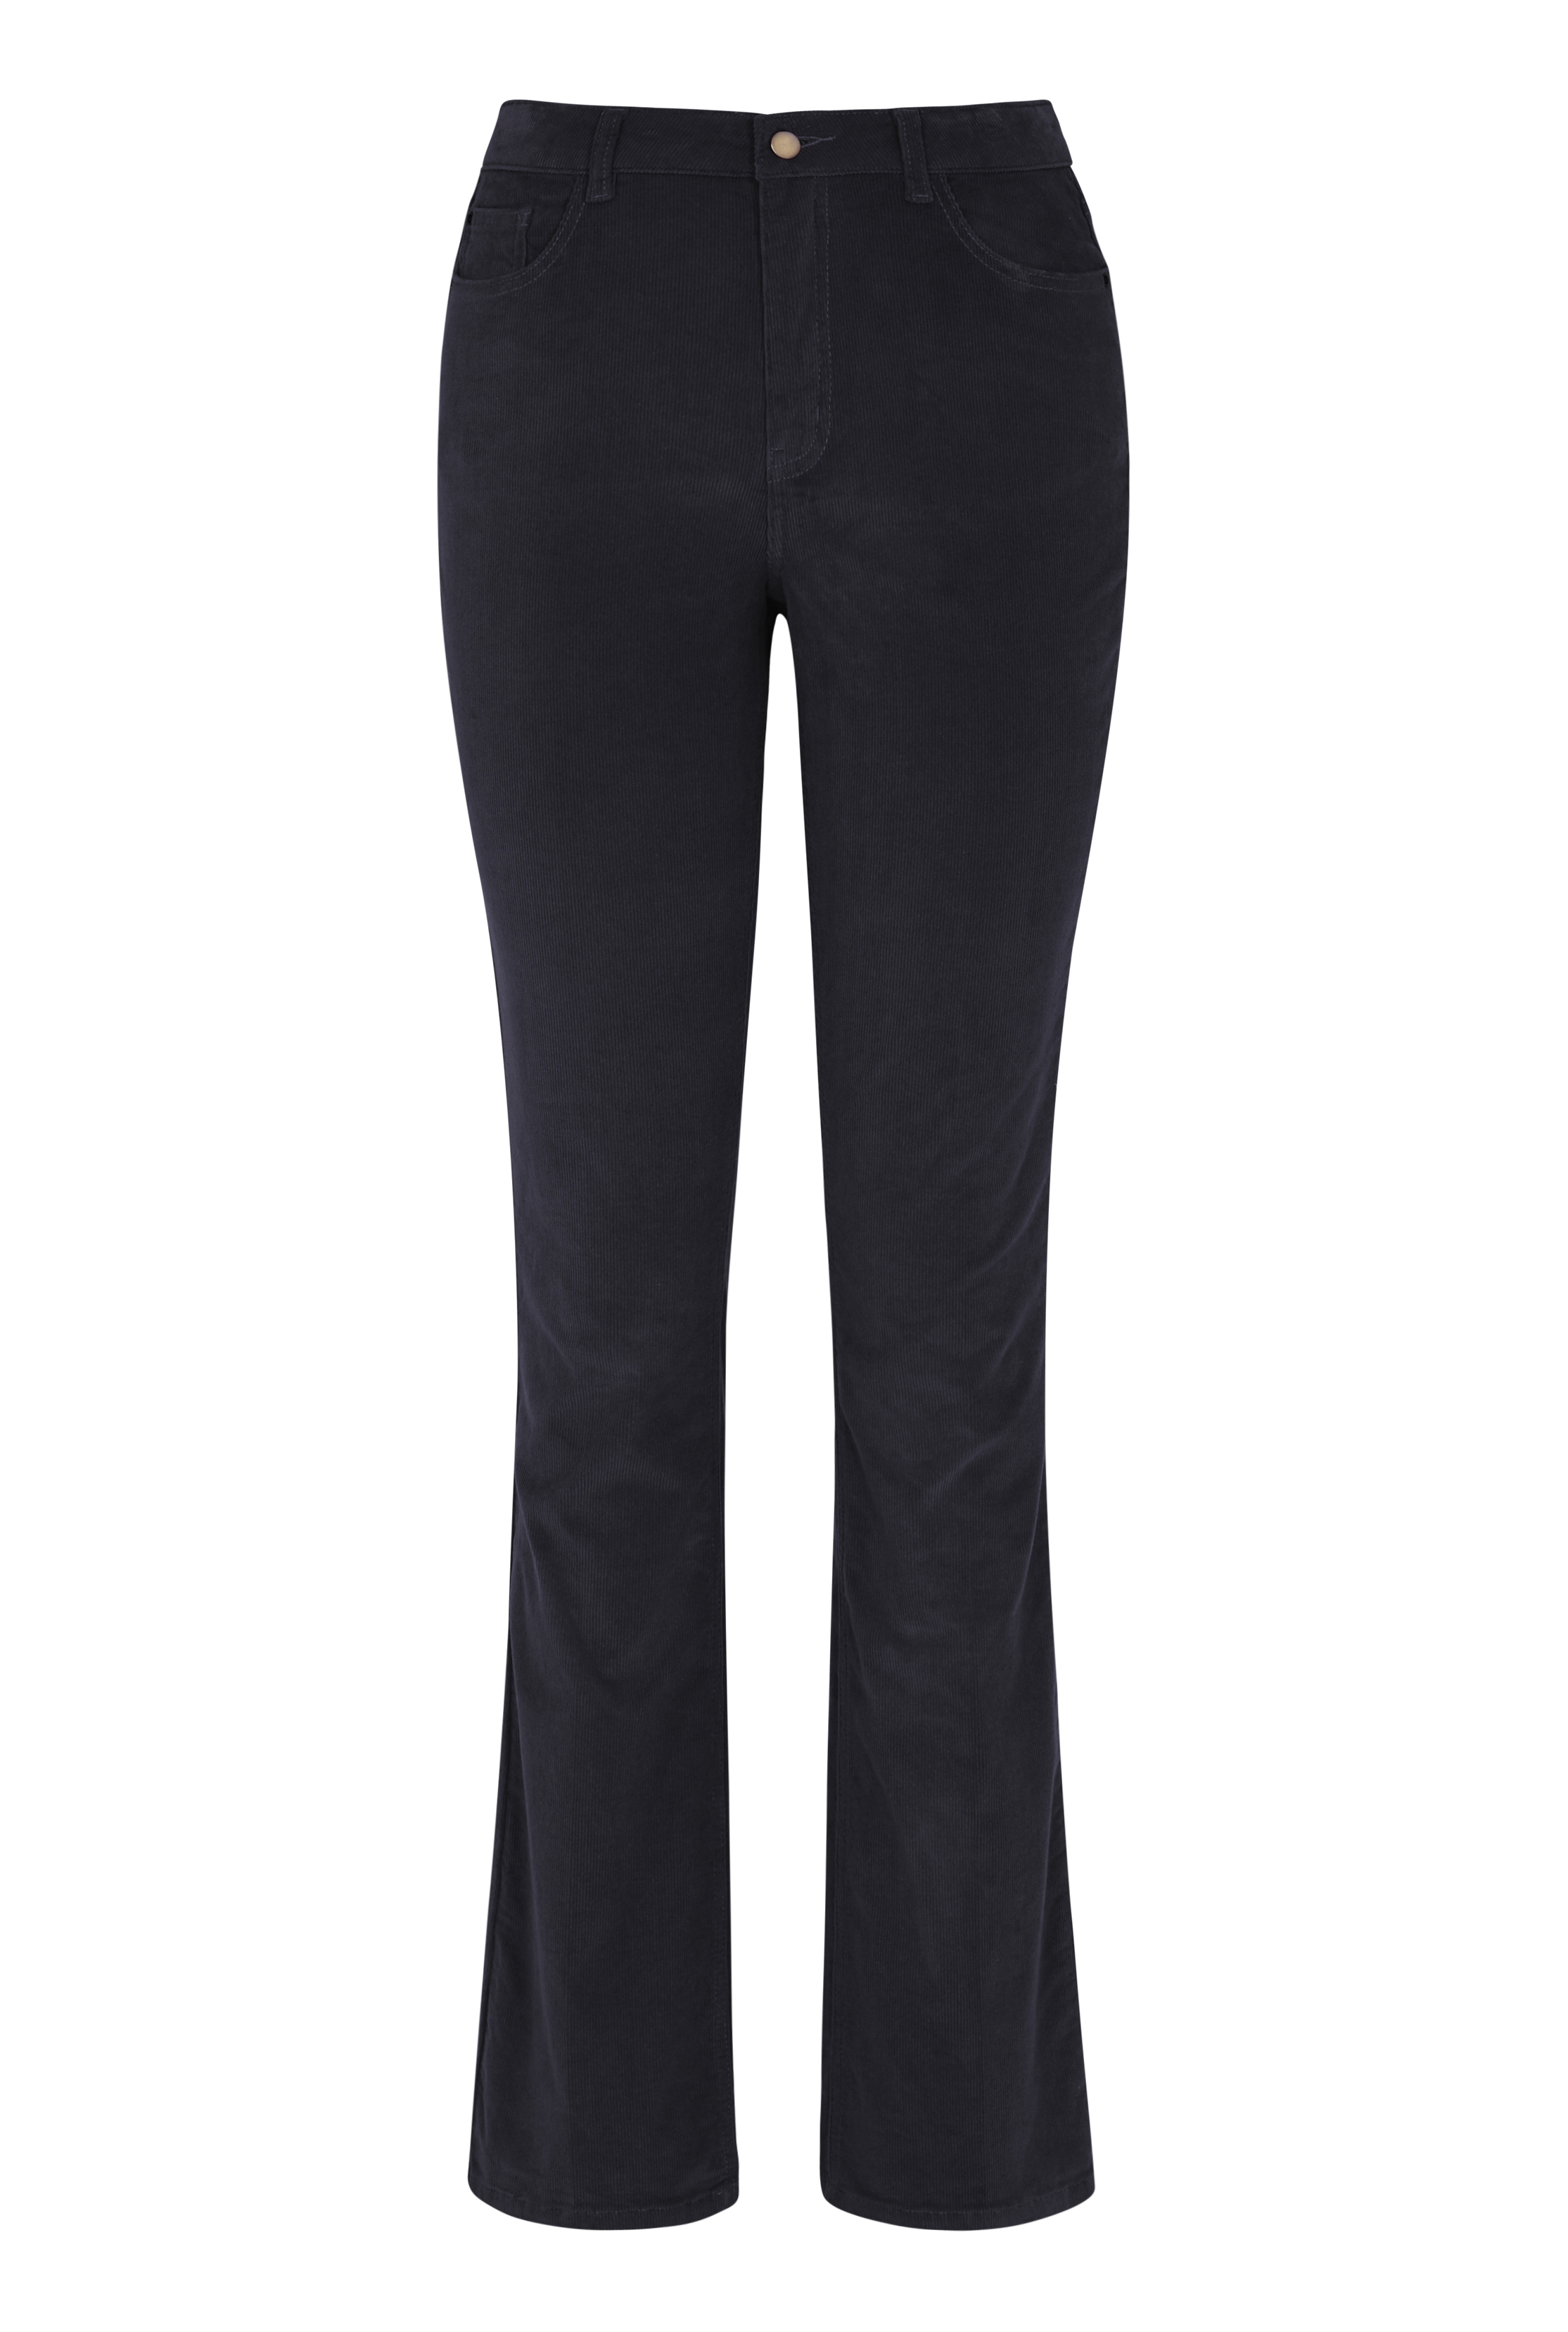 Black Cord Bootcut Trousers | Long Tall Sally